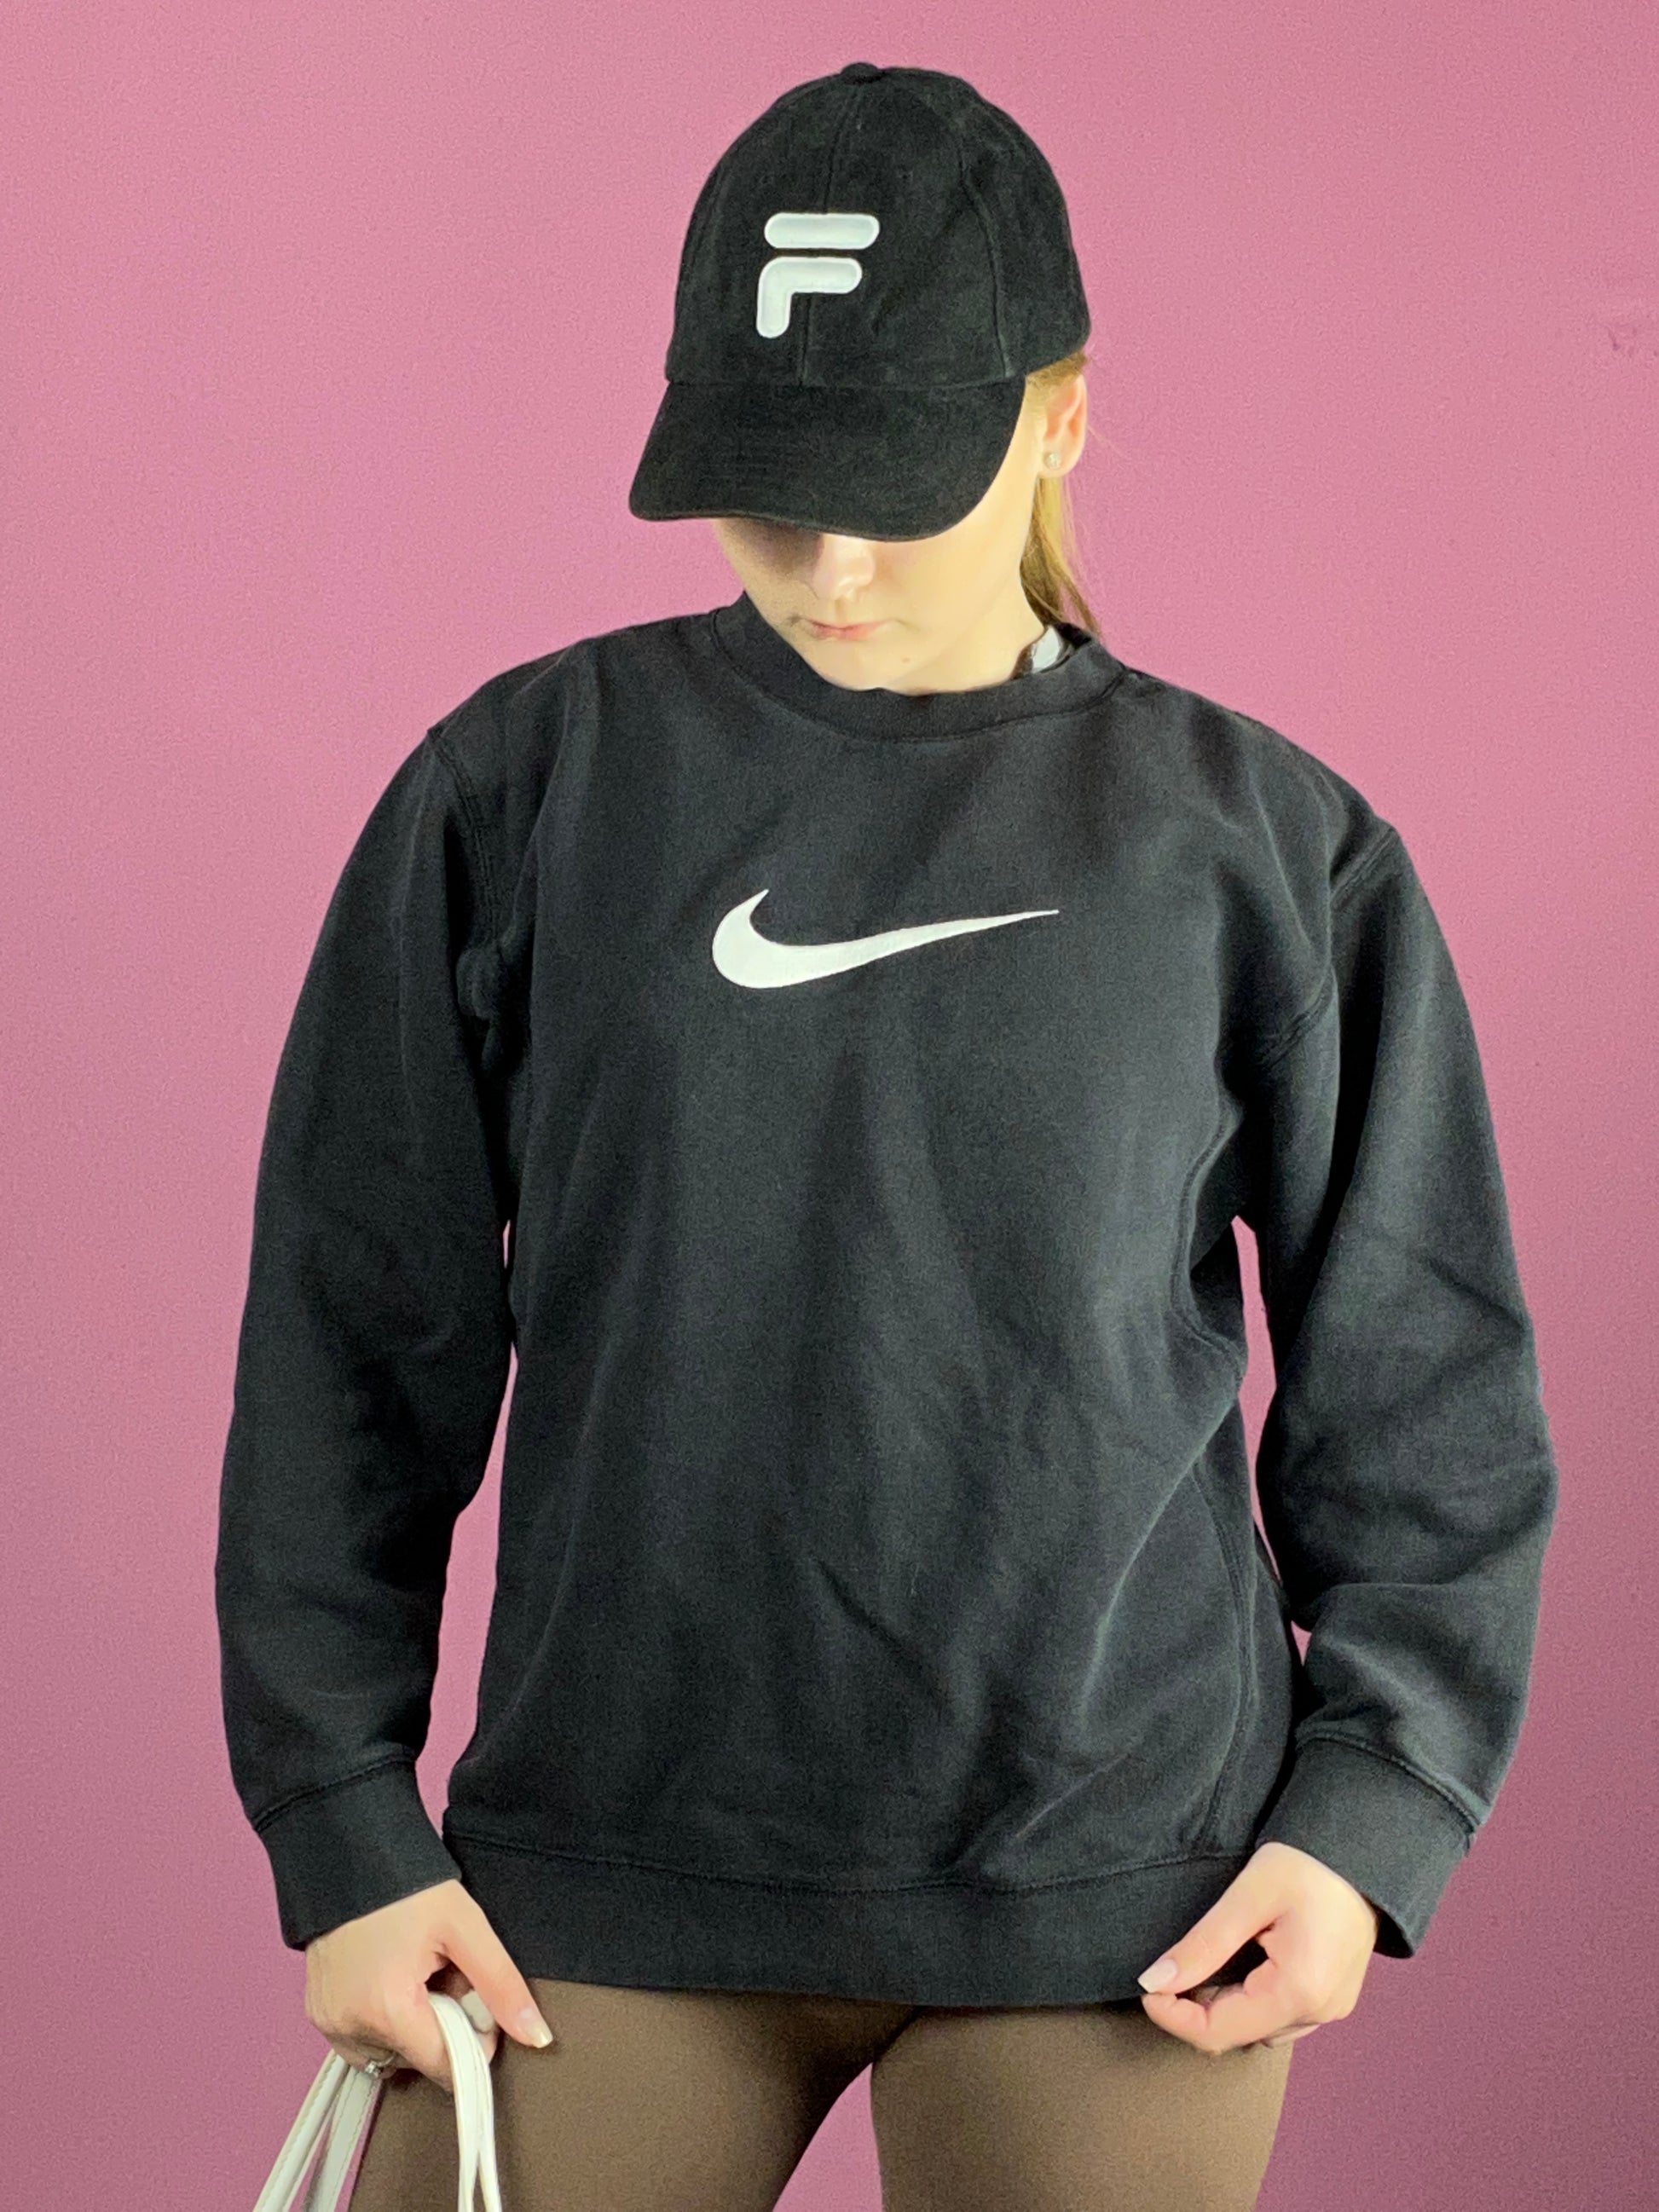 90s Nike Vintage Women's Big Logo Sweatshirt - Small Black Cotton Blend